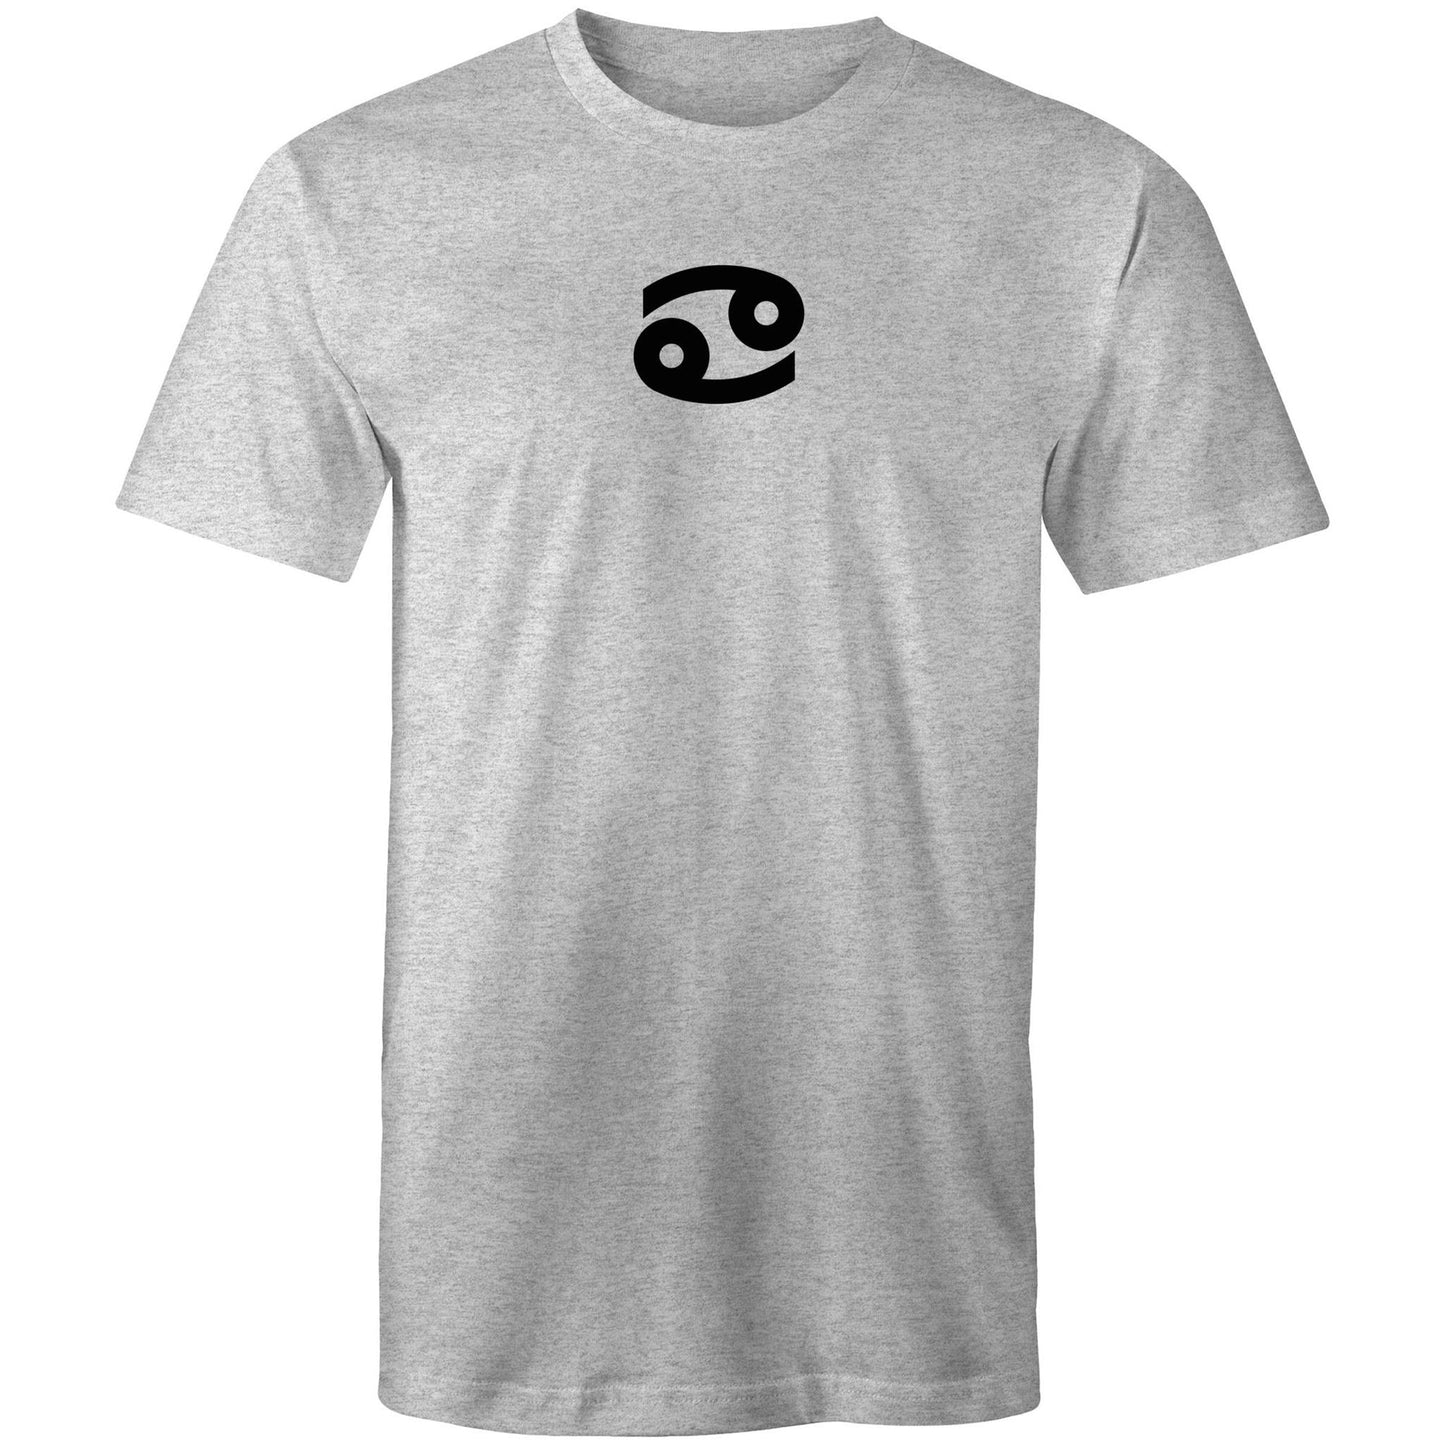 Cancer T Shirts for Men (Unisex)